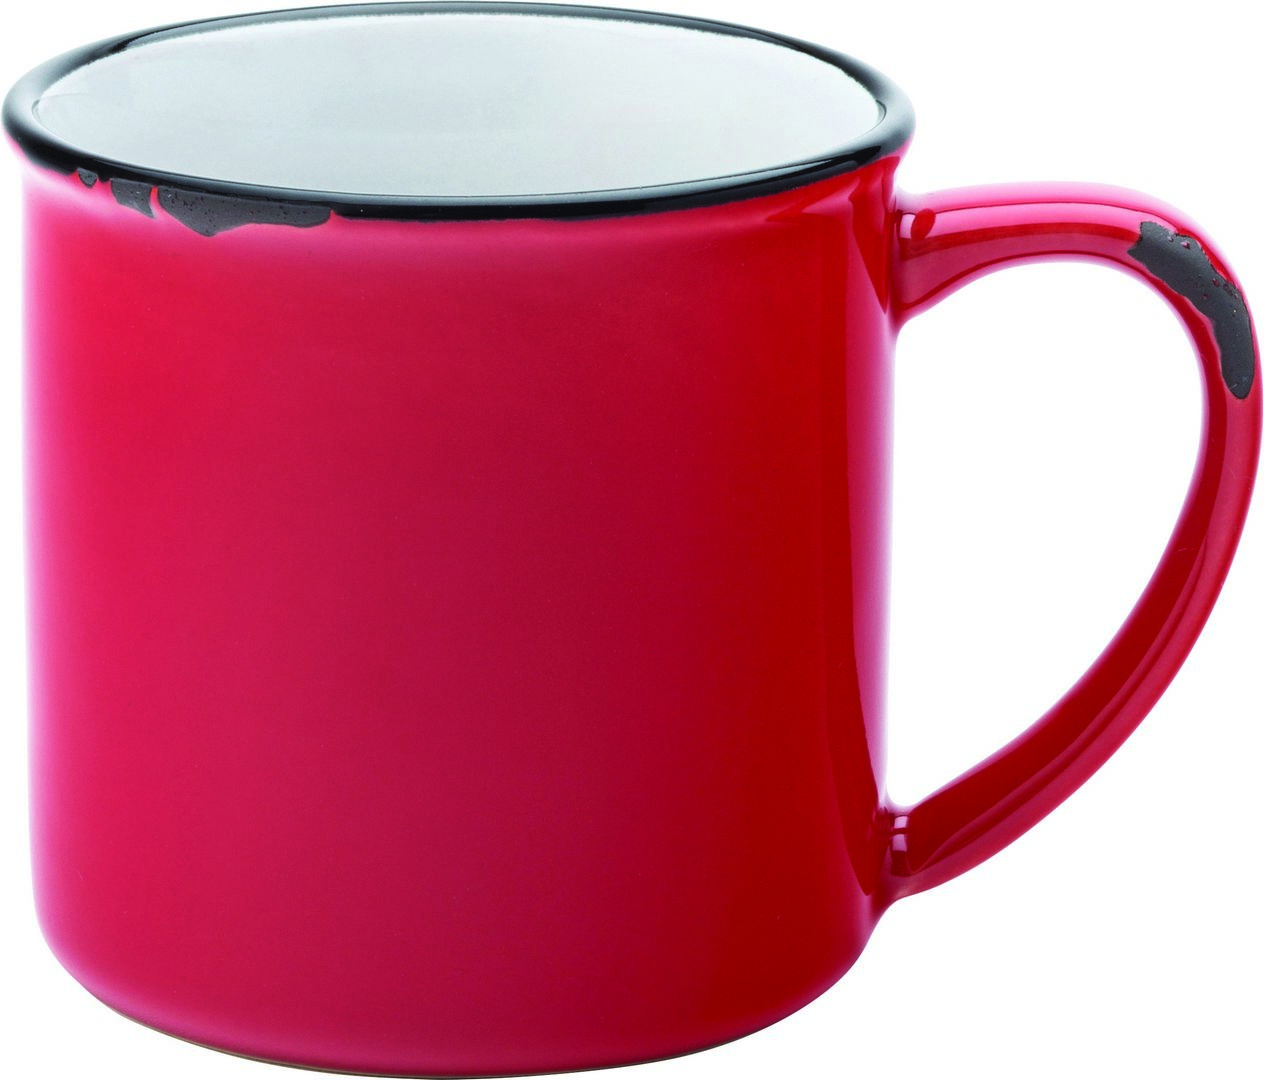 Avebury Colours Red Mug 10oz (28cl) - CT6016-000000-B01012 (Pack of 12)